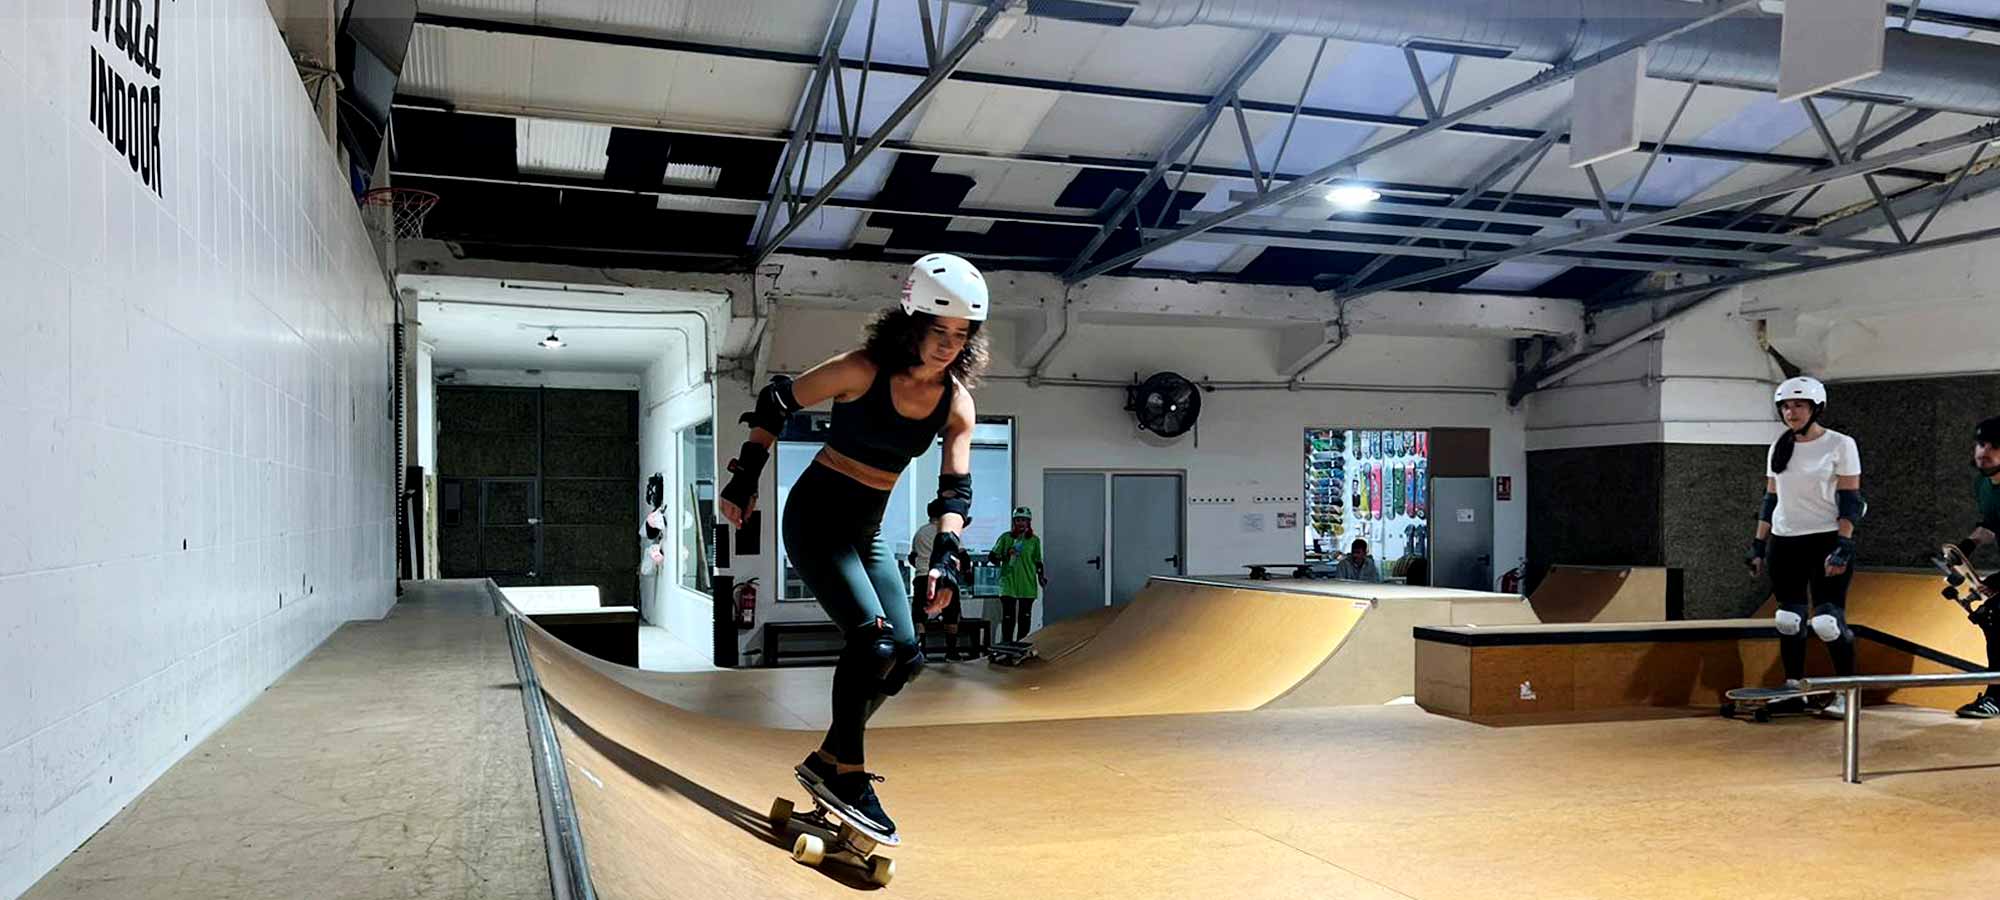 clases surfskate skatepark techado